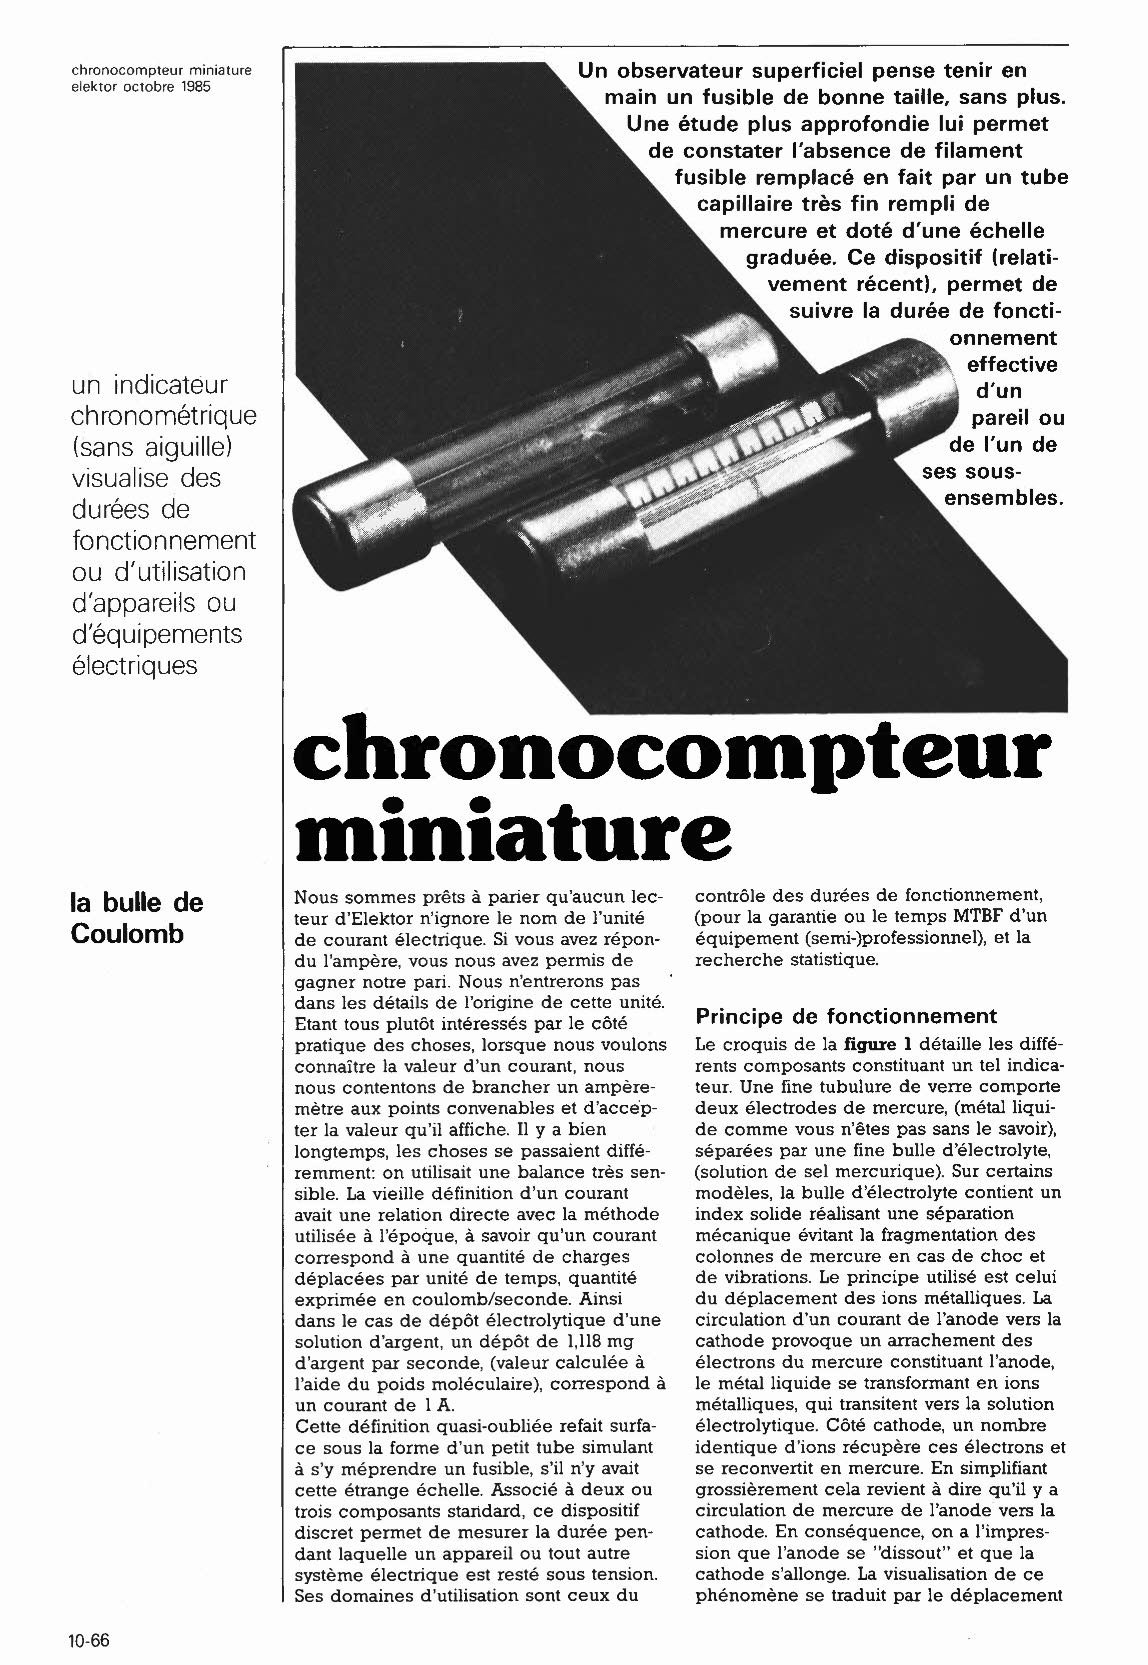 chronocompteur miniature